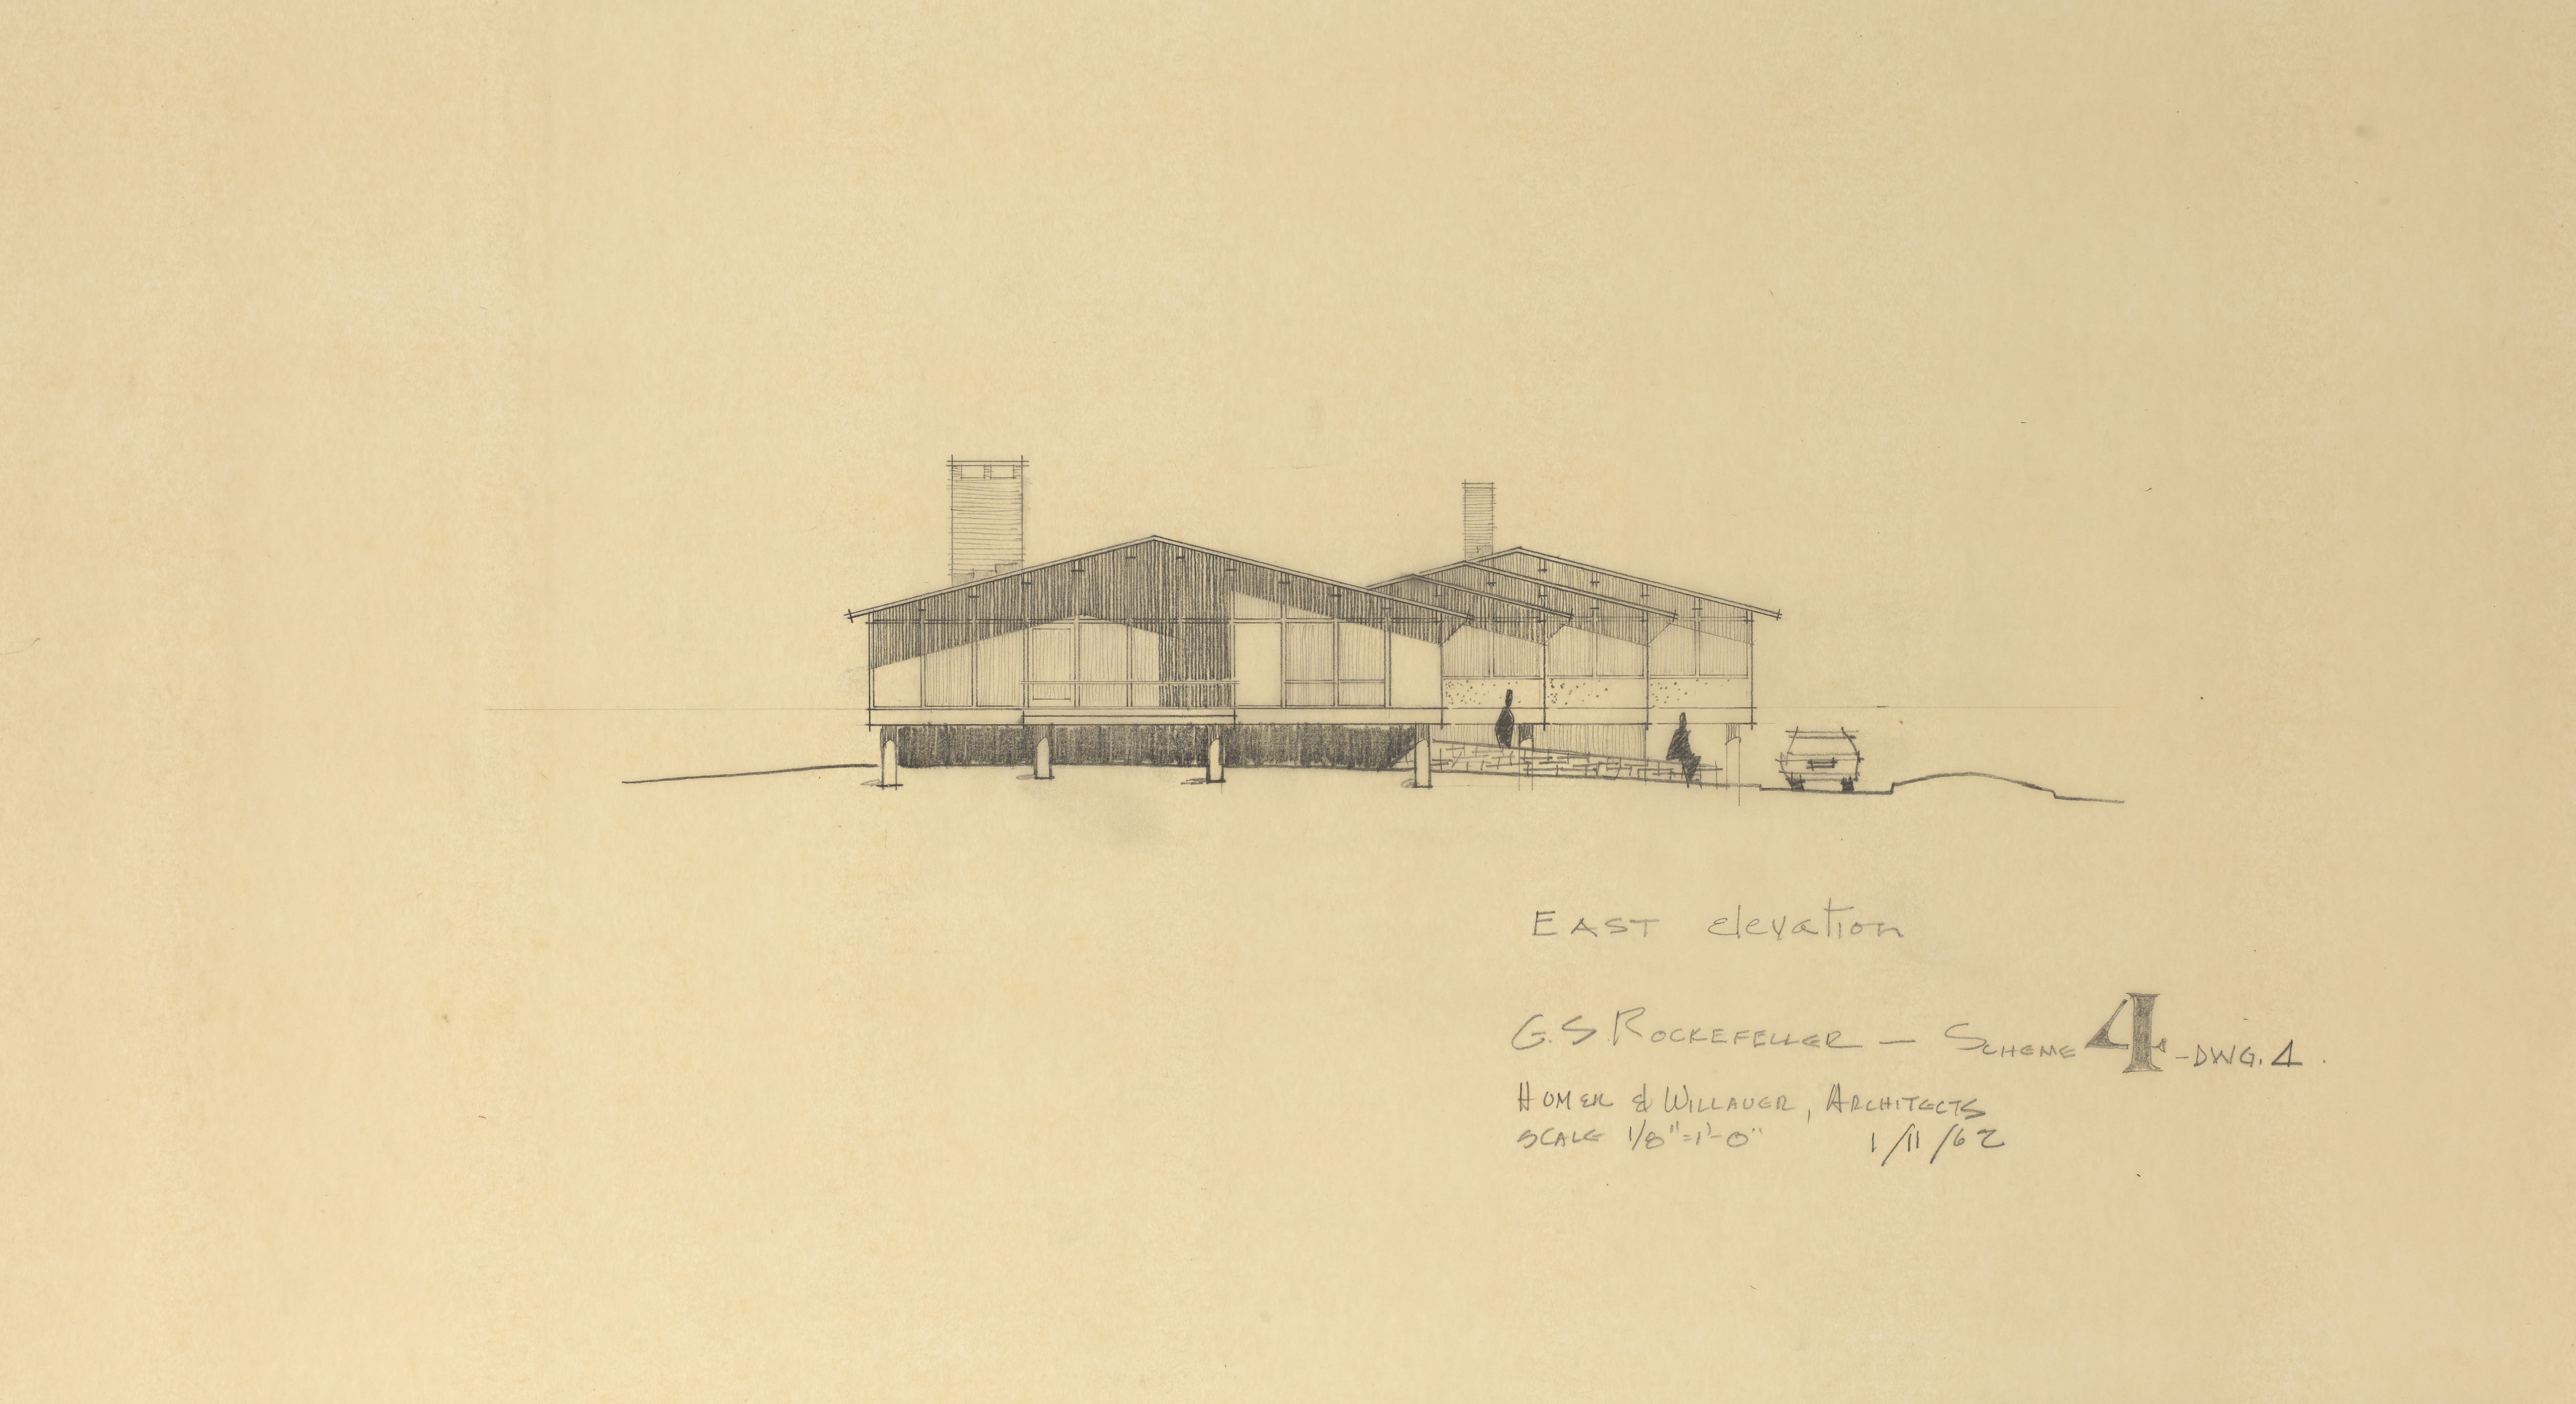 GSR Scheme 4 DWG 4, 1962, graphite on tracing paper, 14 x 26 inches